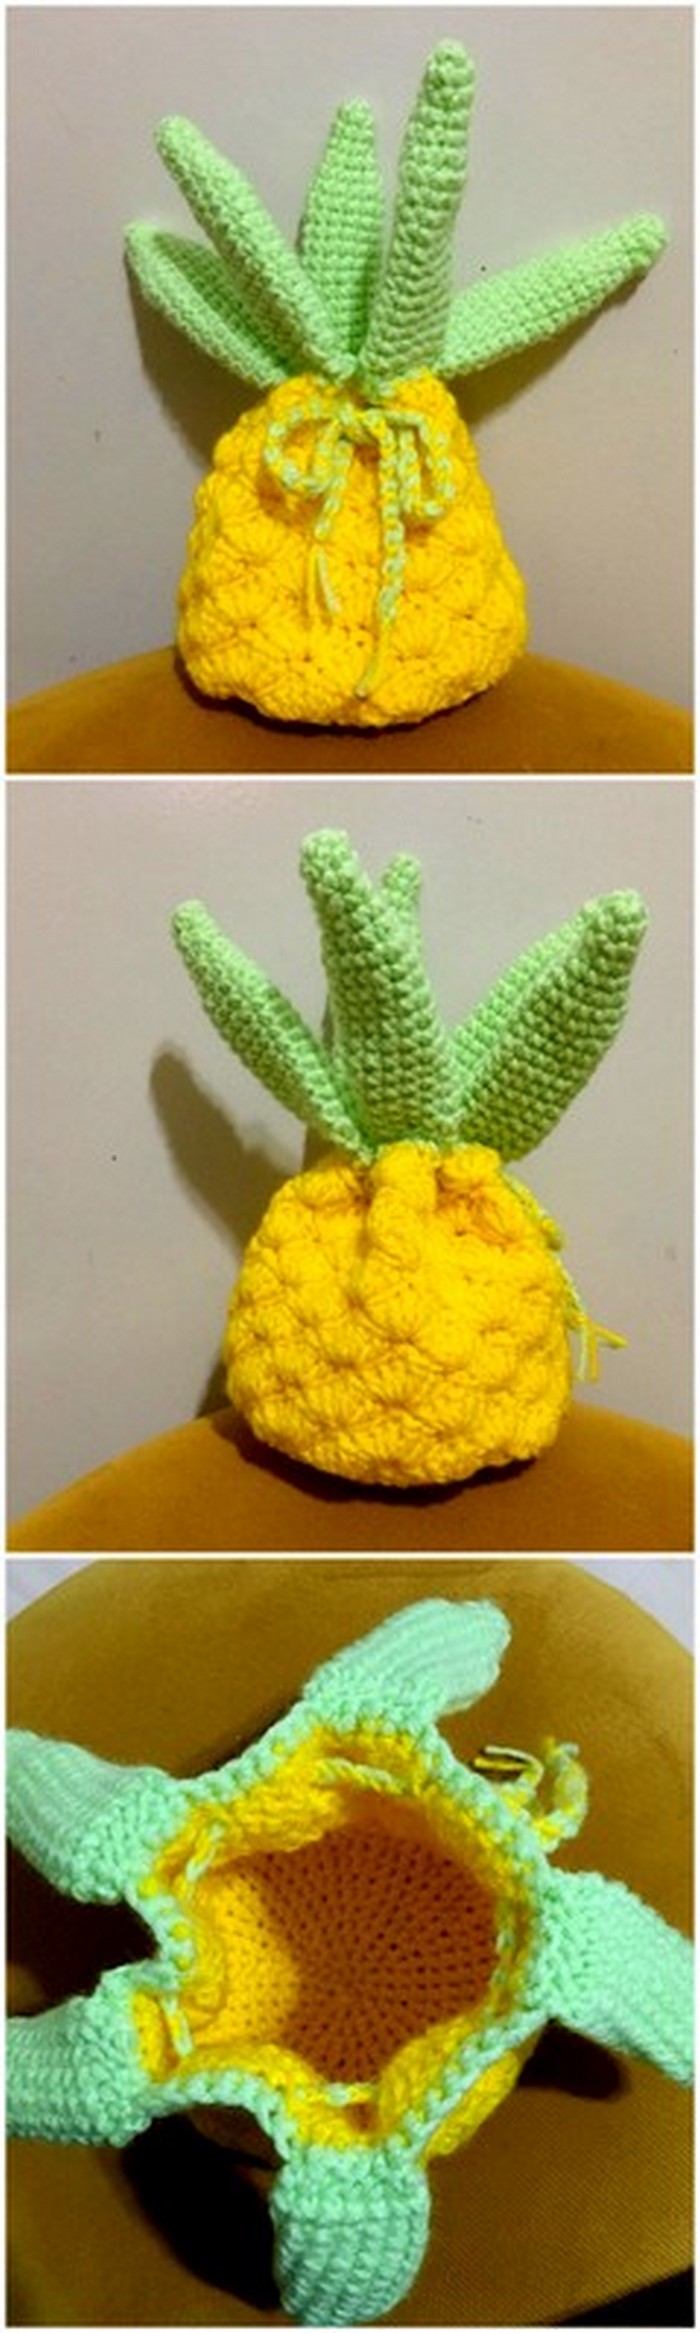 DIY crochet pouch design